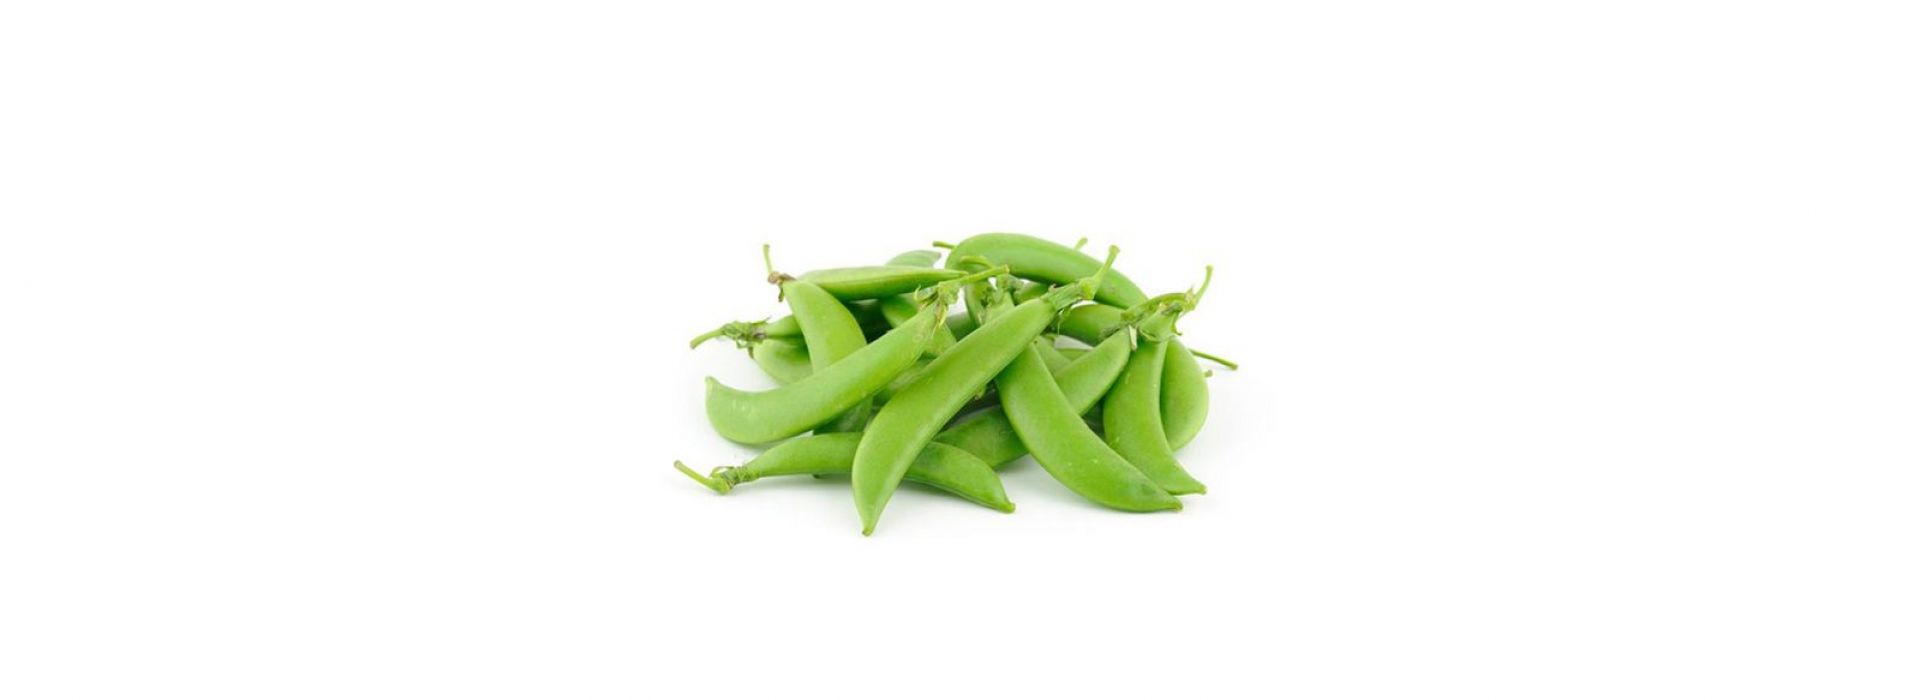 Beans Snow Peas